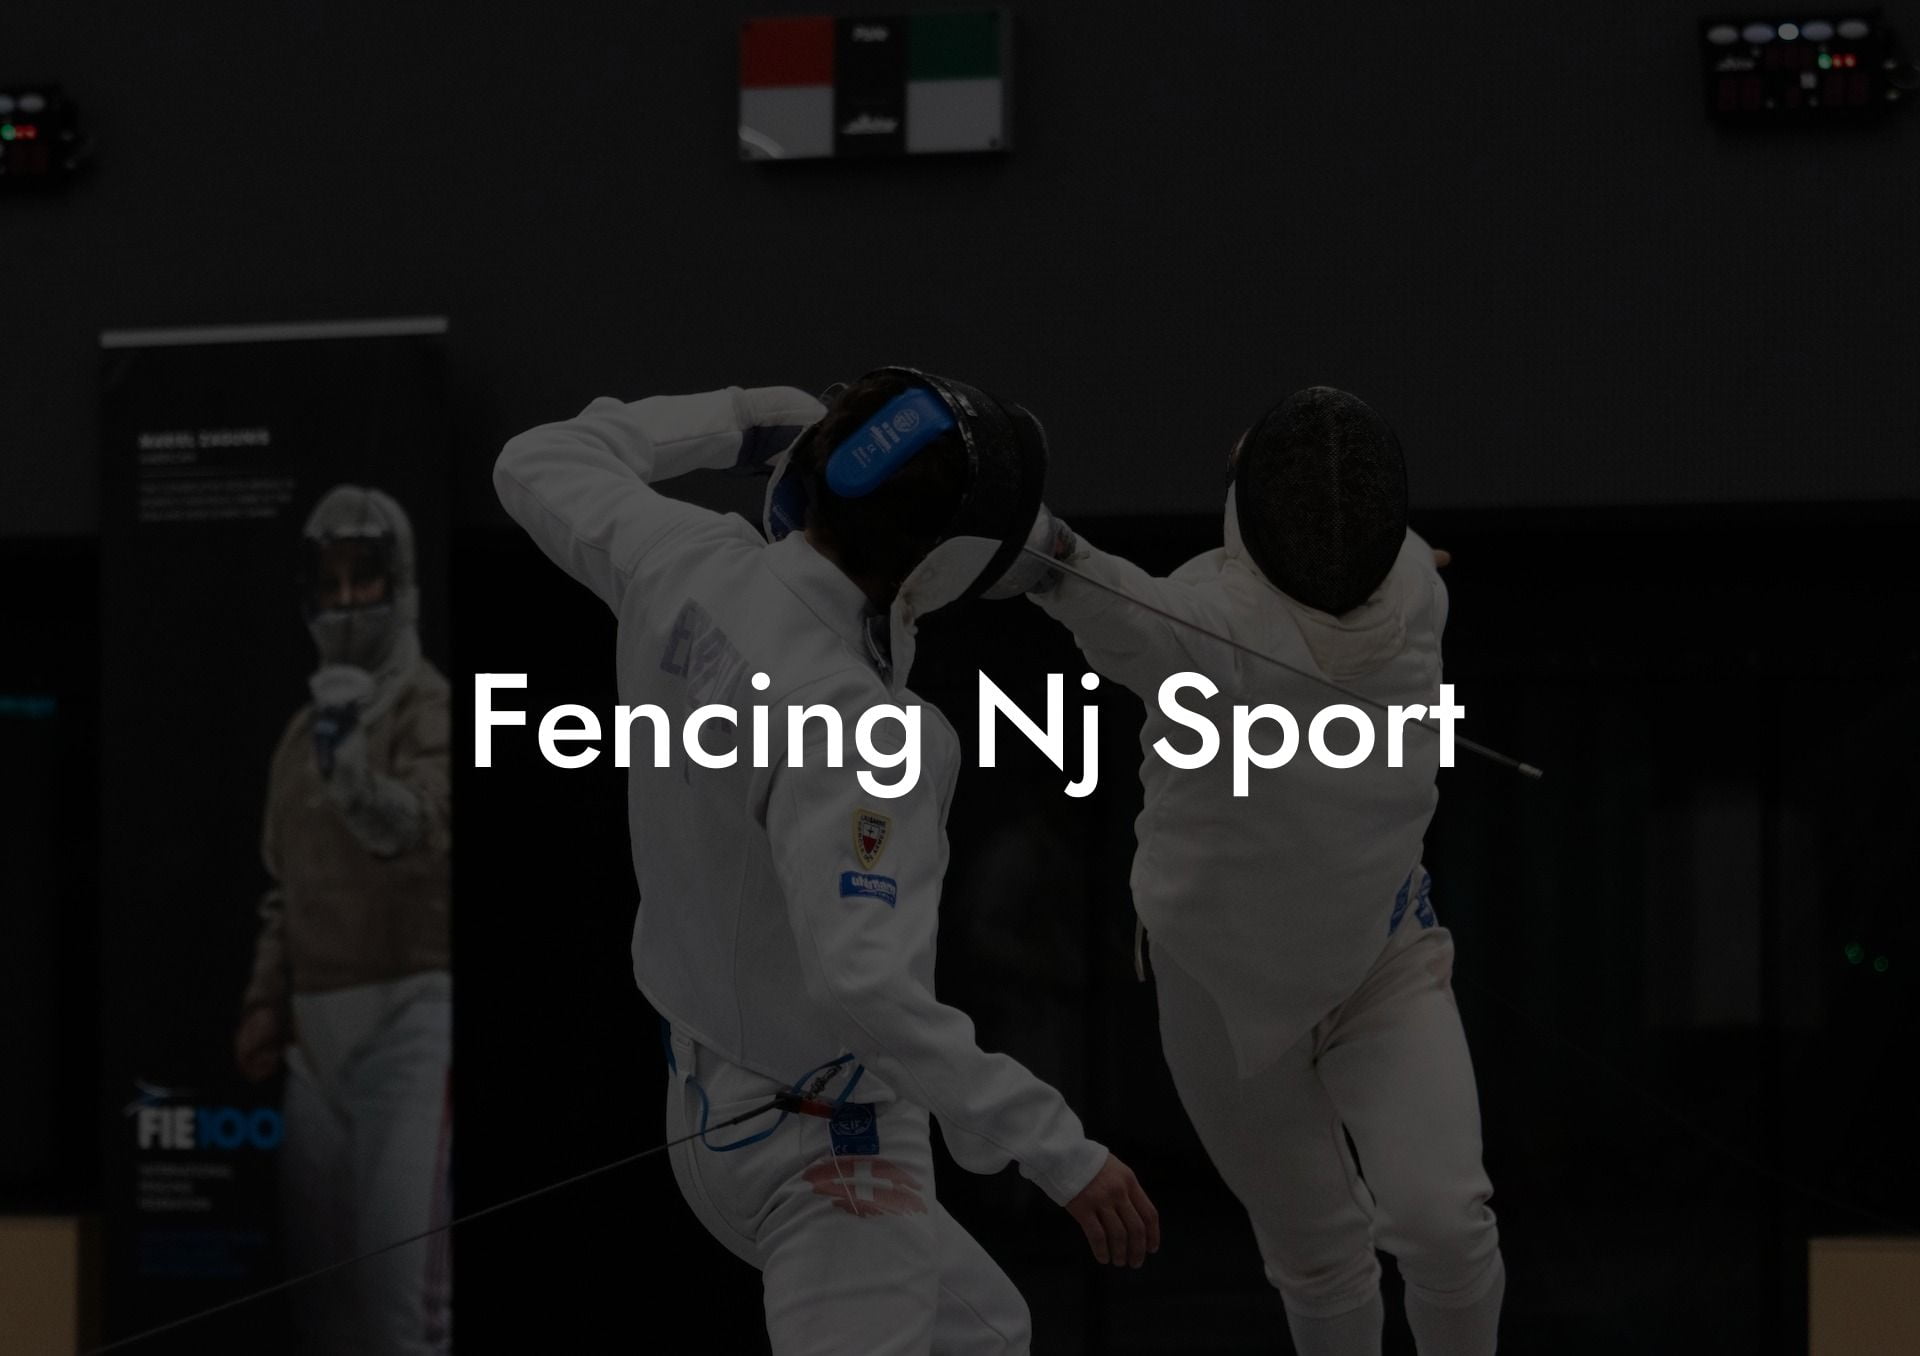 Fencing Nj Sport